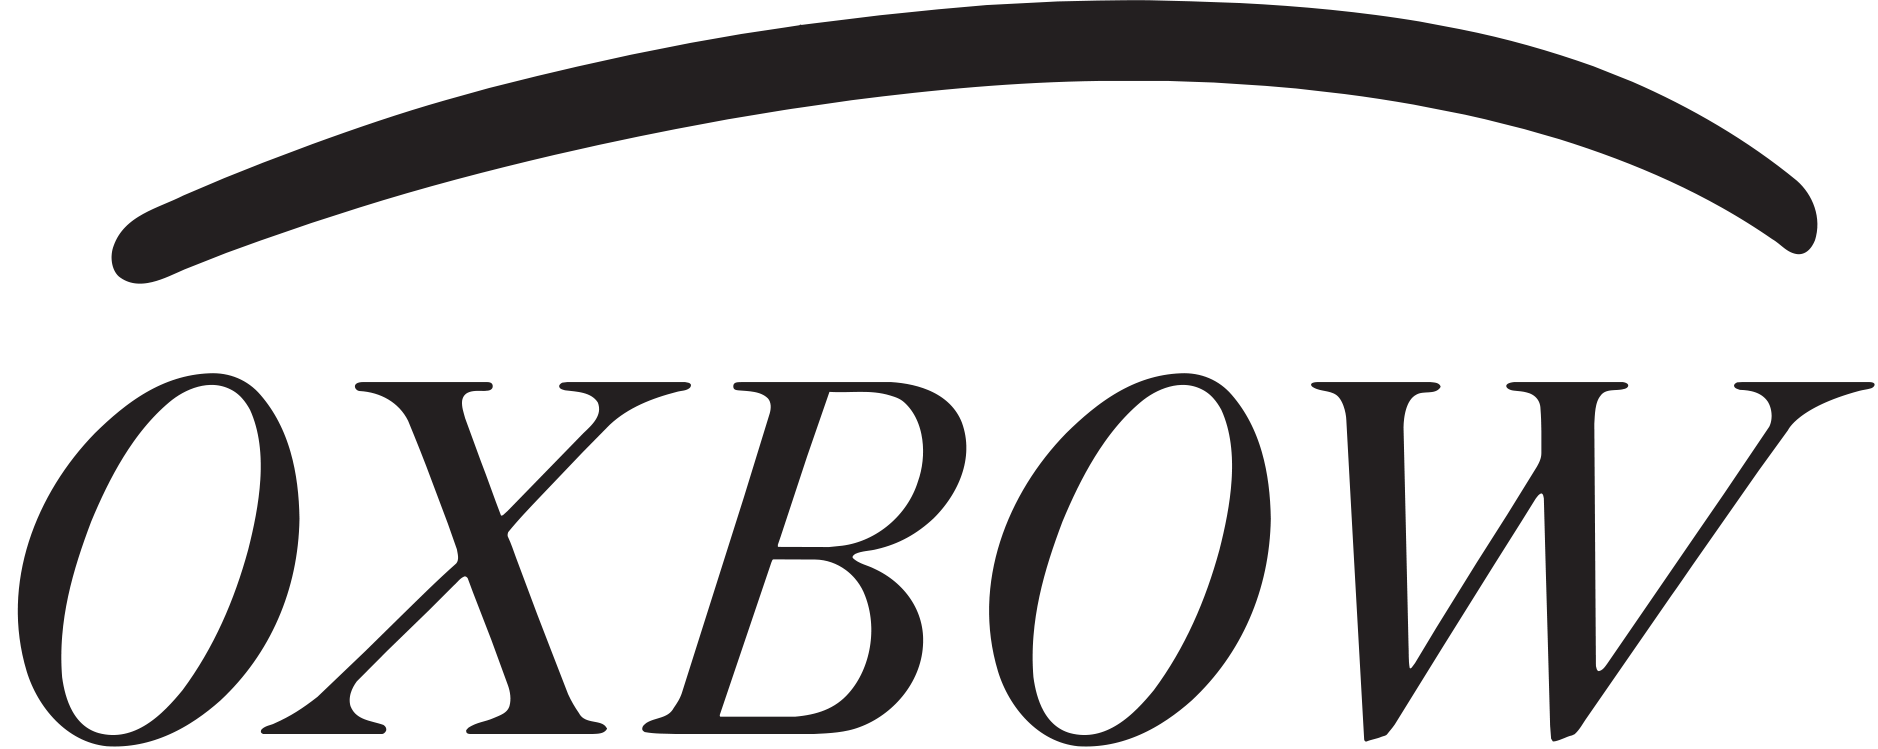 Brand logo for Oxbow